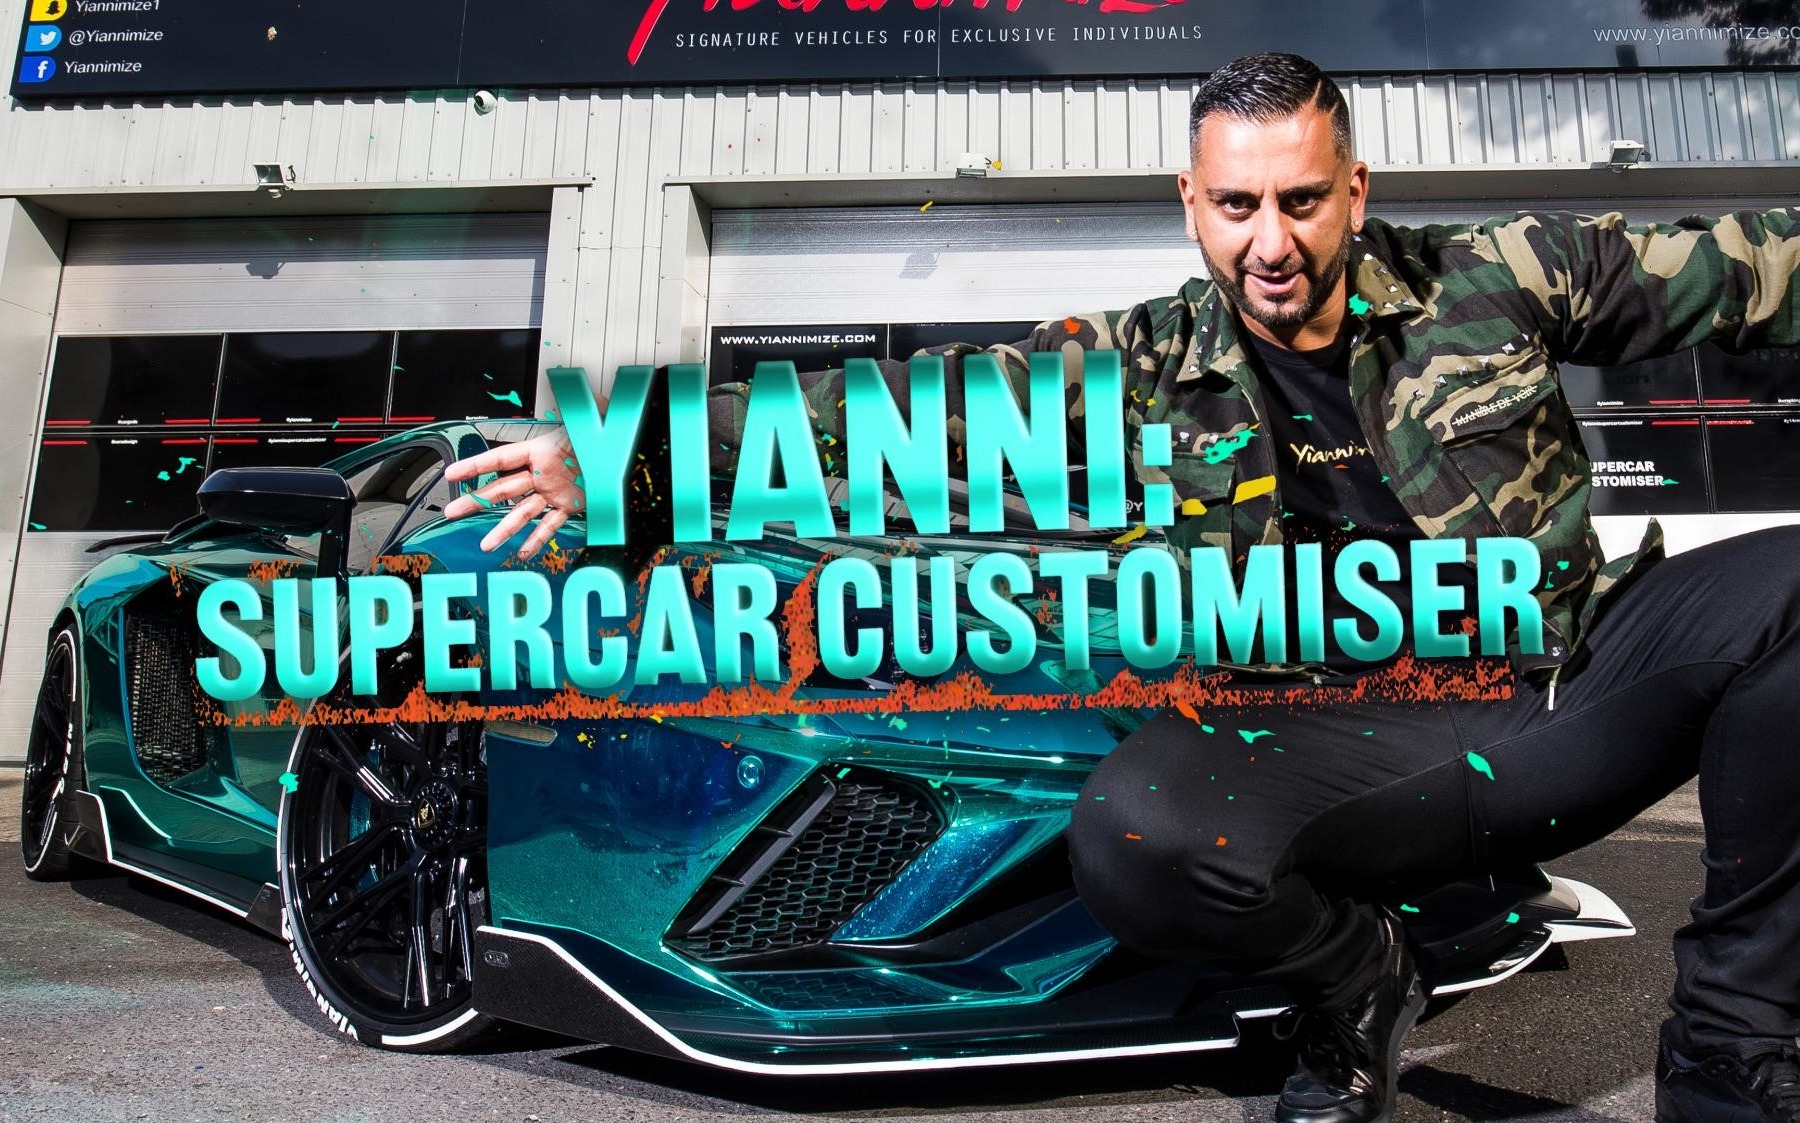 Supercars Customiser: Yianni